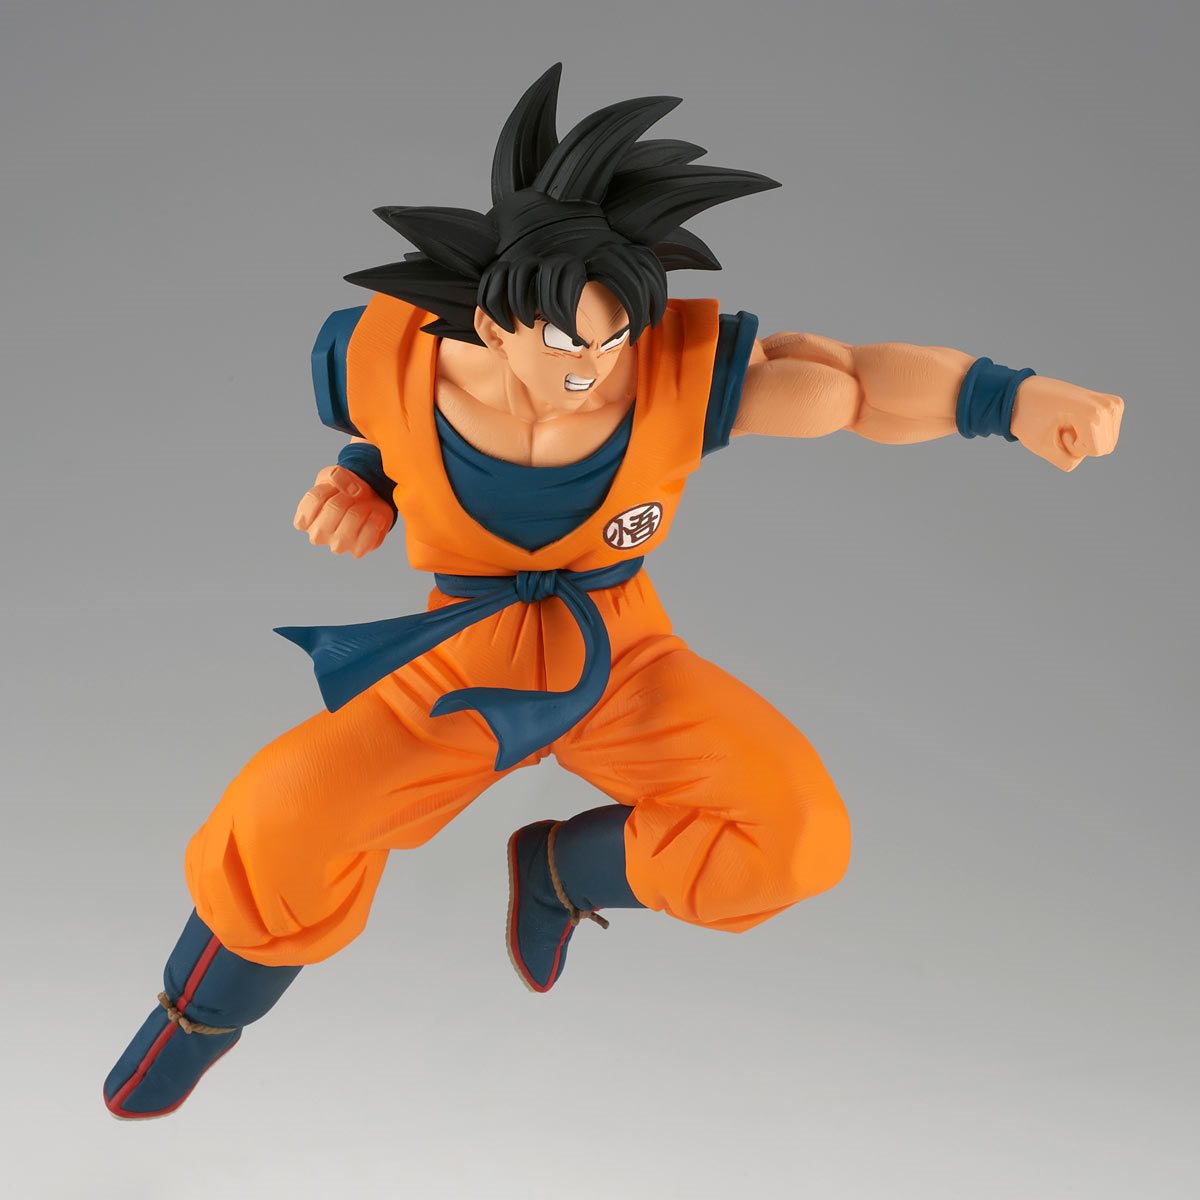 Bandai S.H.Figuarts Dragon Ball Super Super Hero Son Goku Super Hero Figure  orange